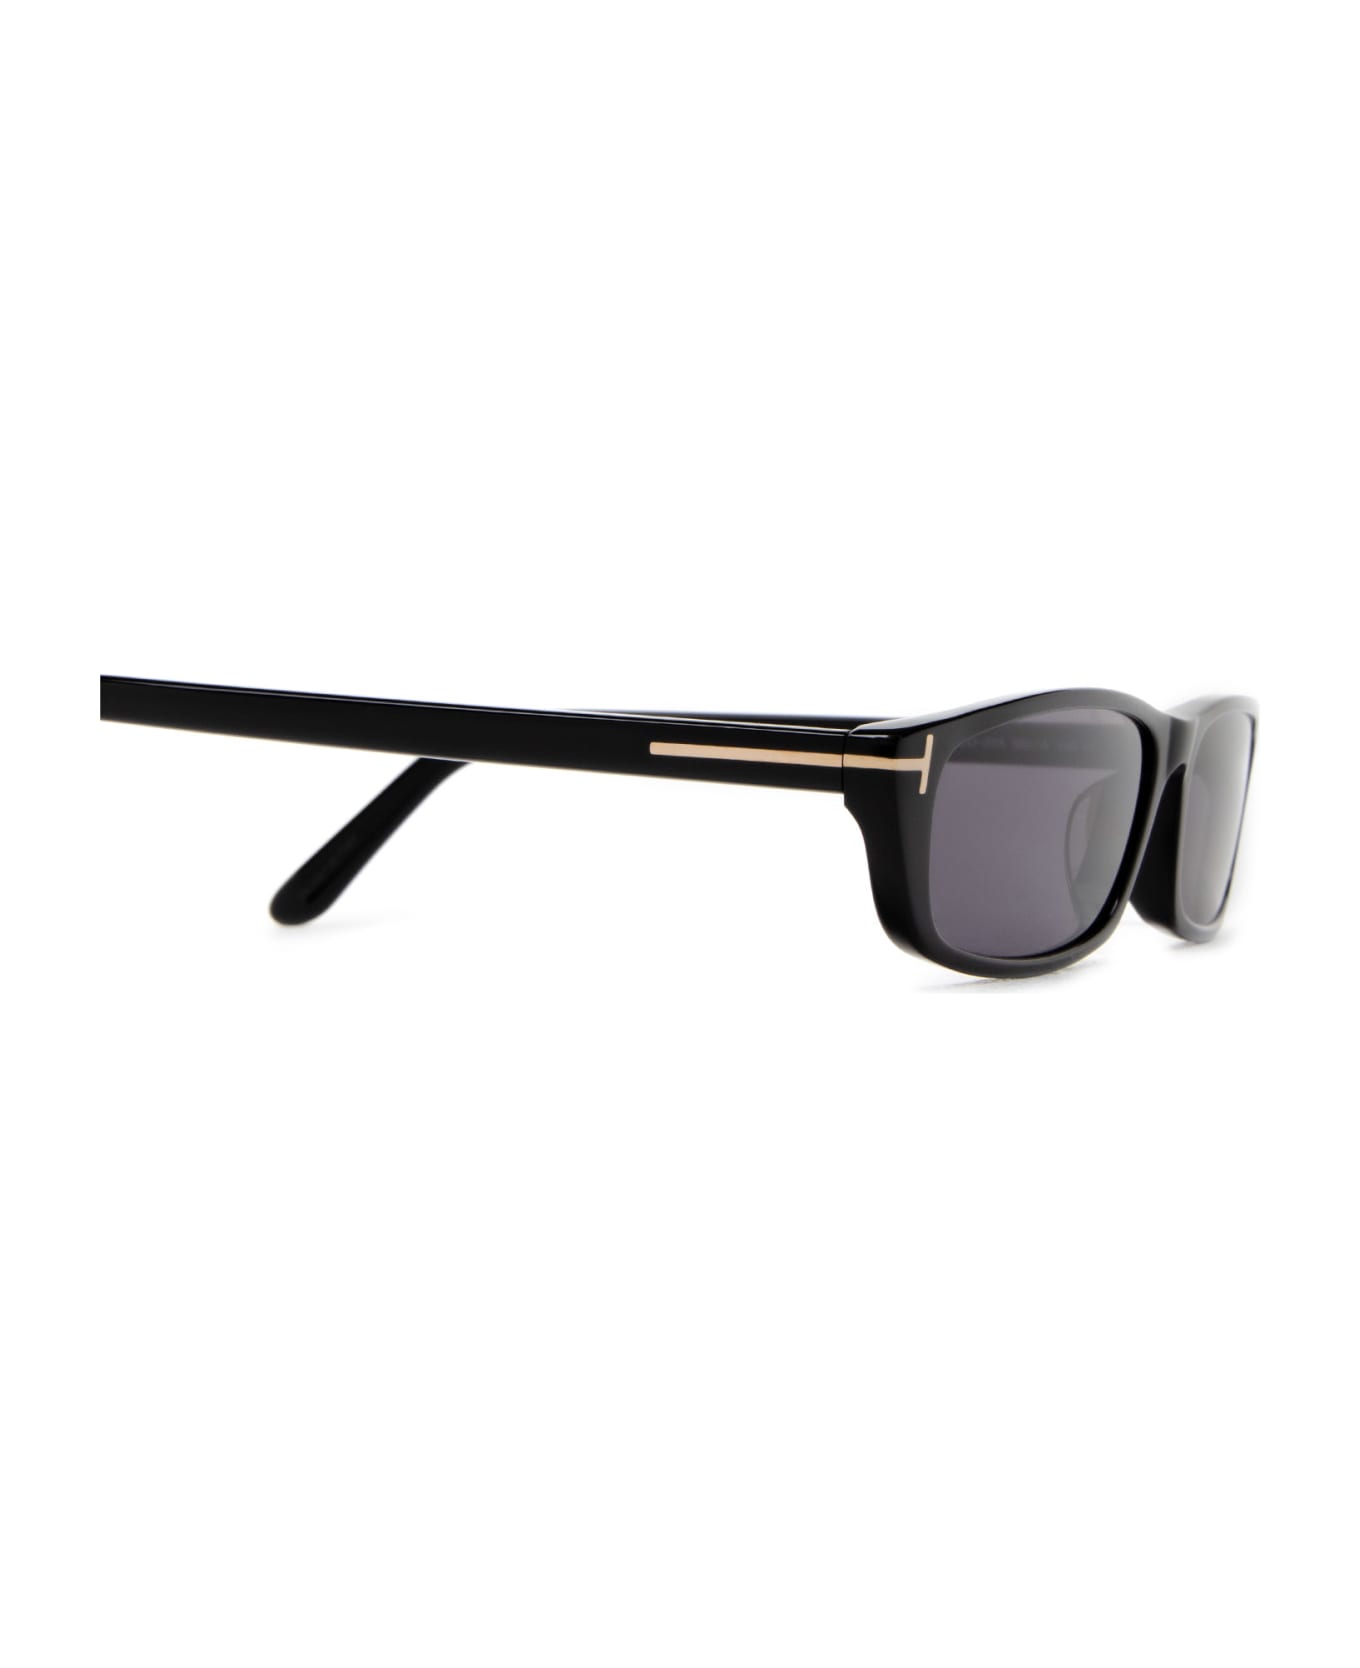 Tom Ford Eyewear Ft1058 Shiny Black Sunglasses - Shiny Black